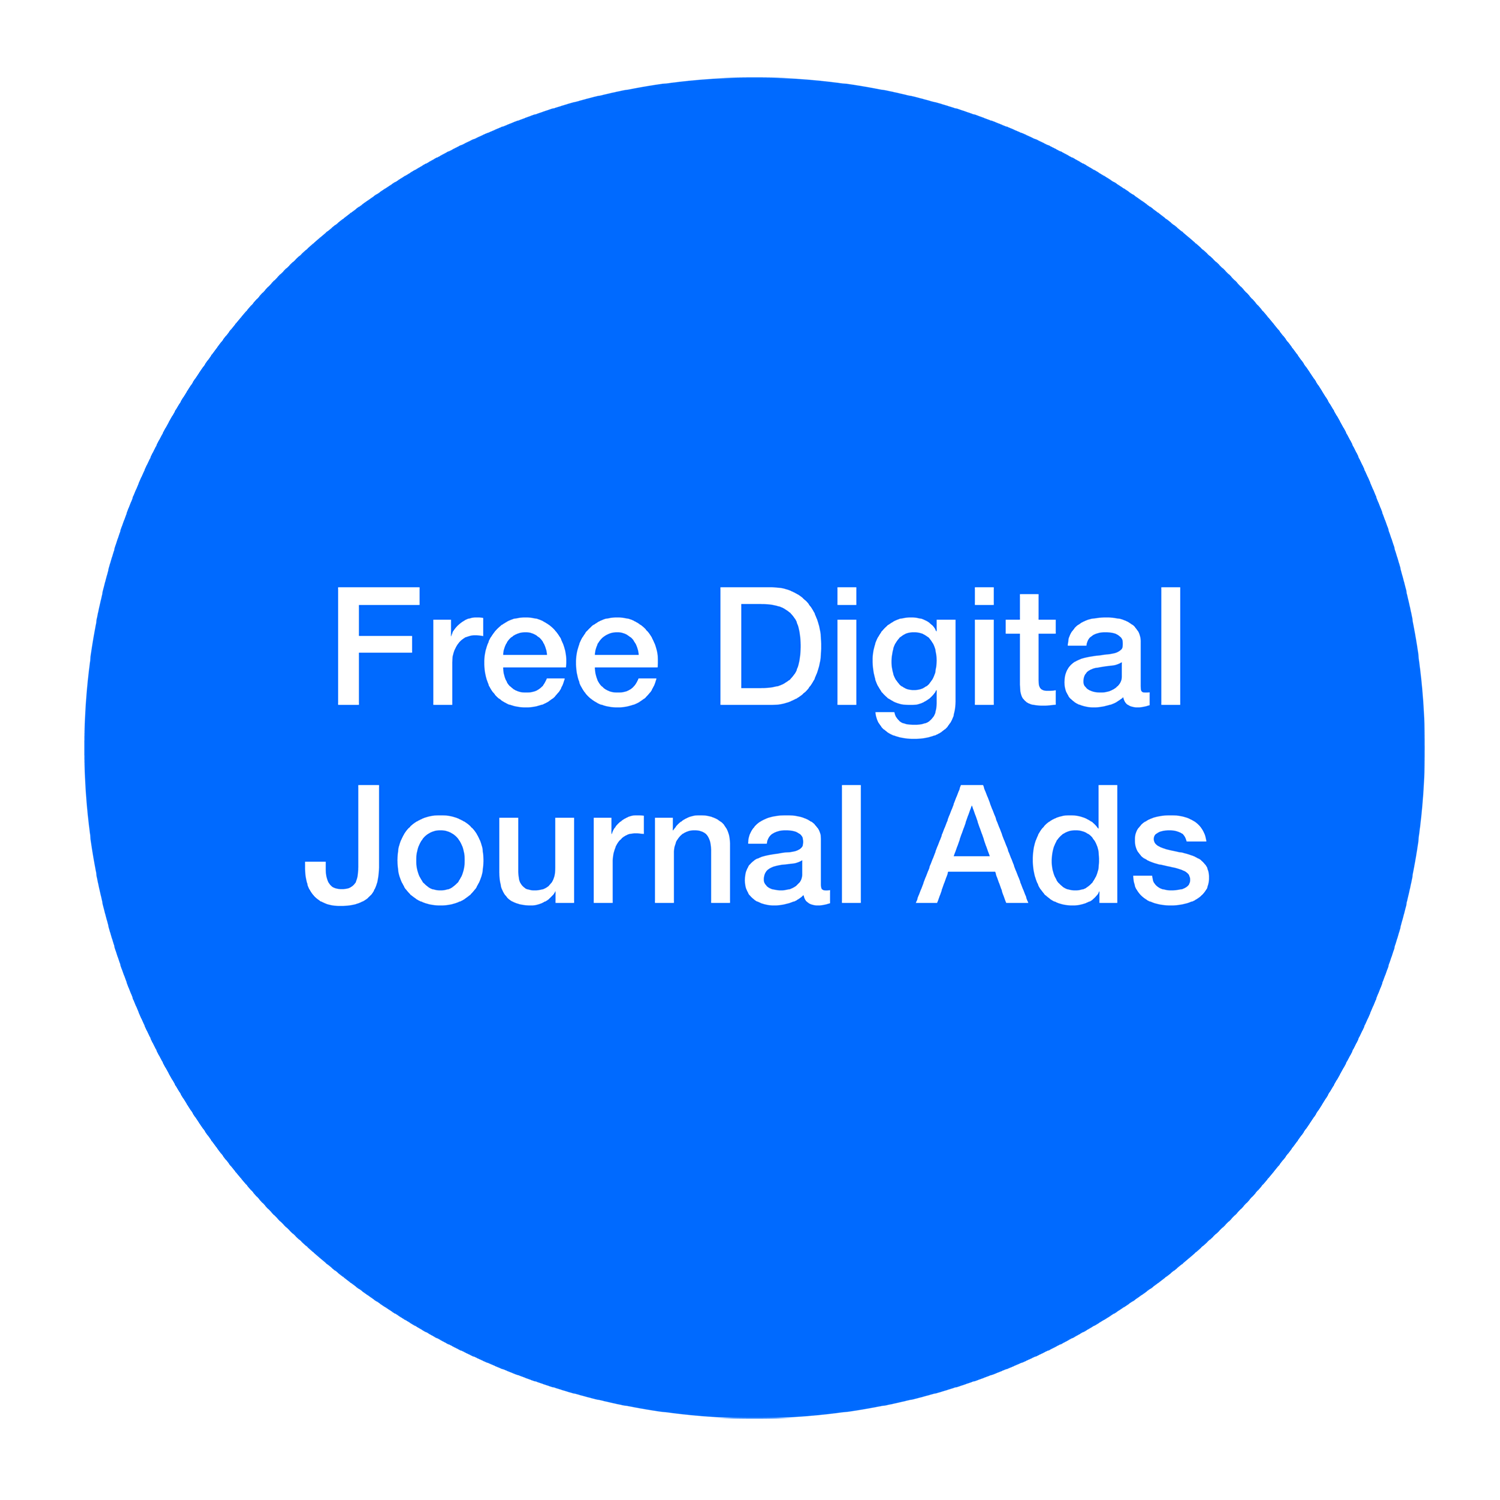 Free Digital Journal Ads